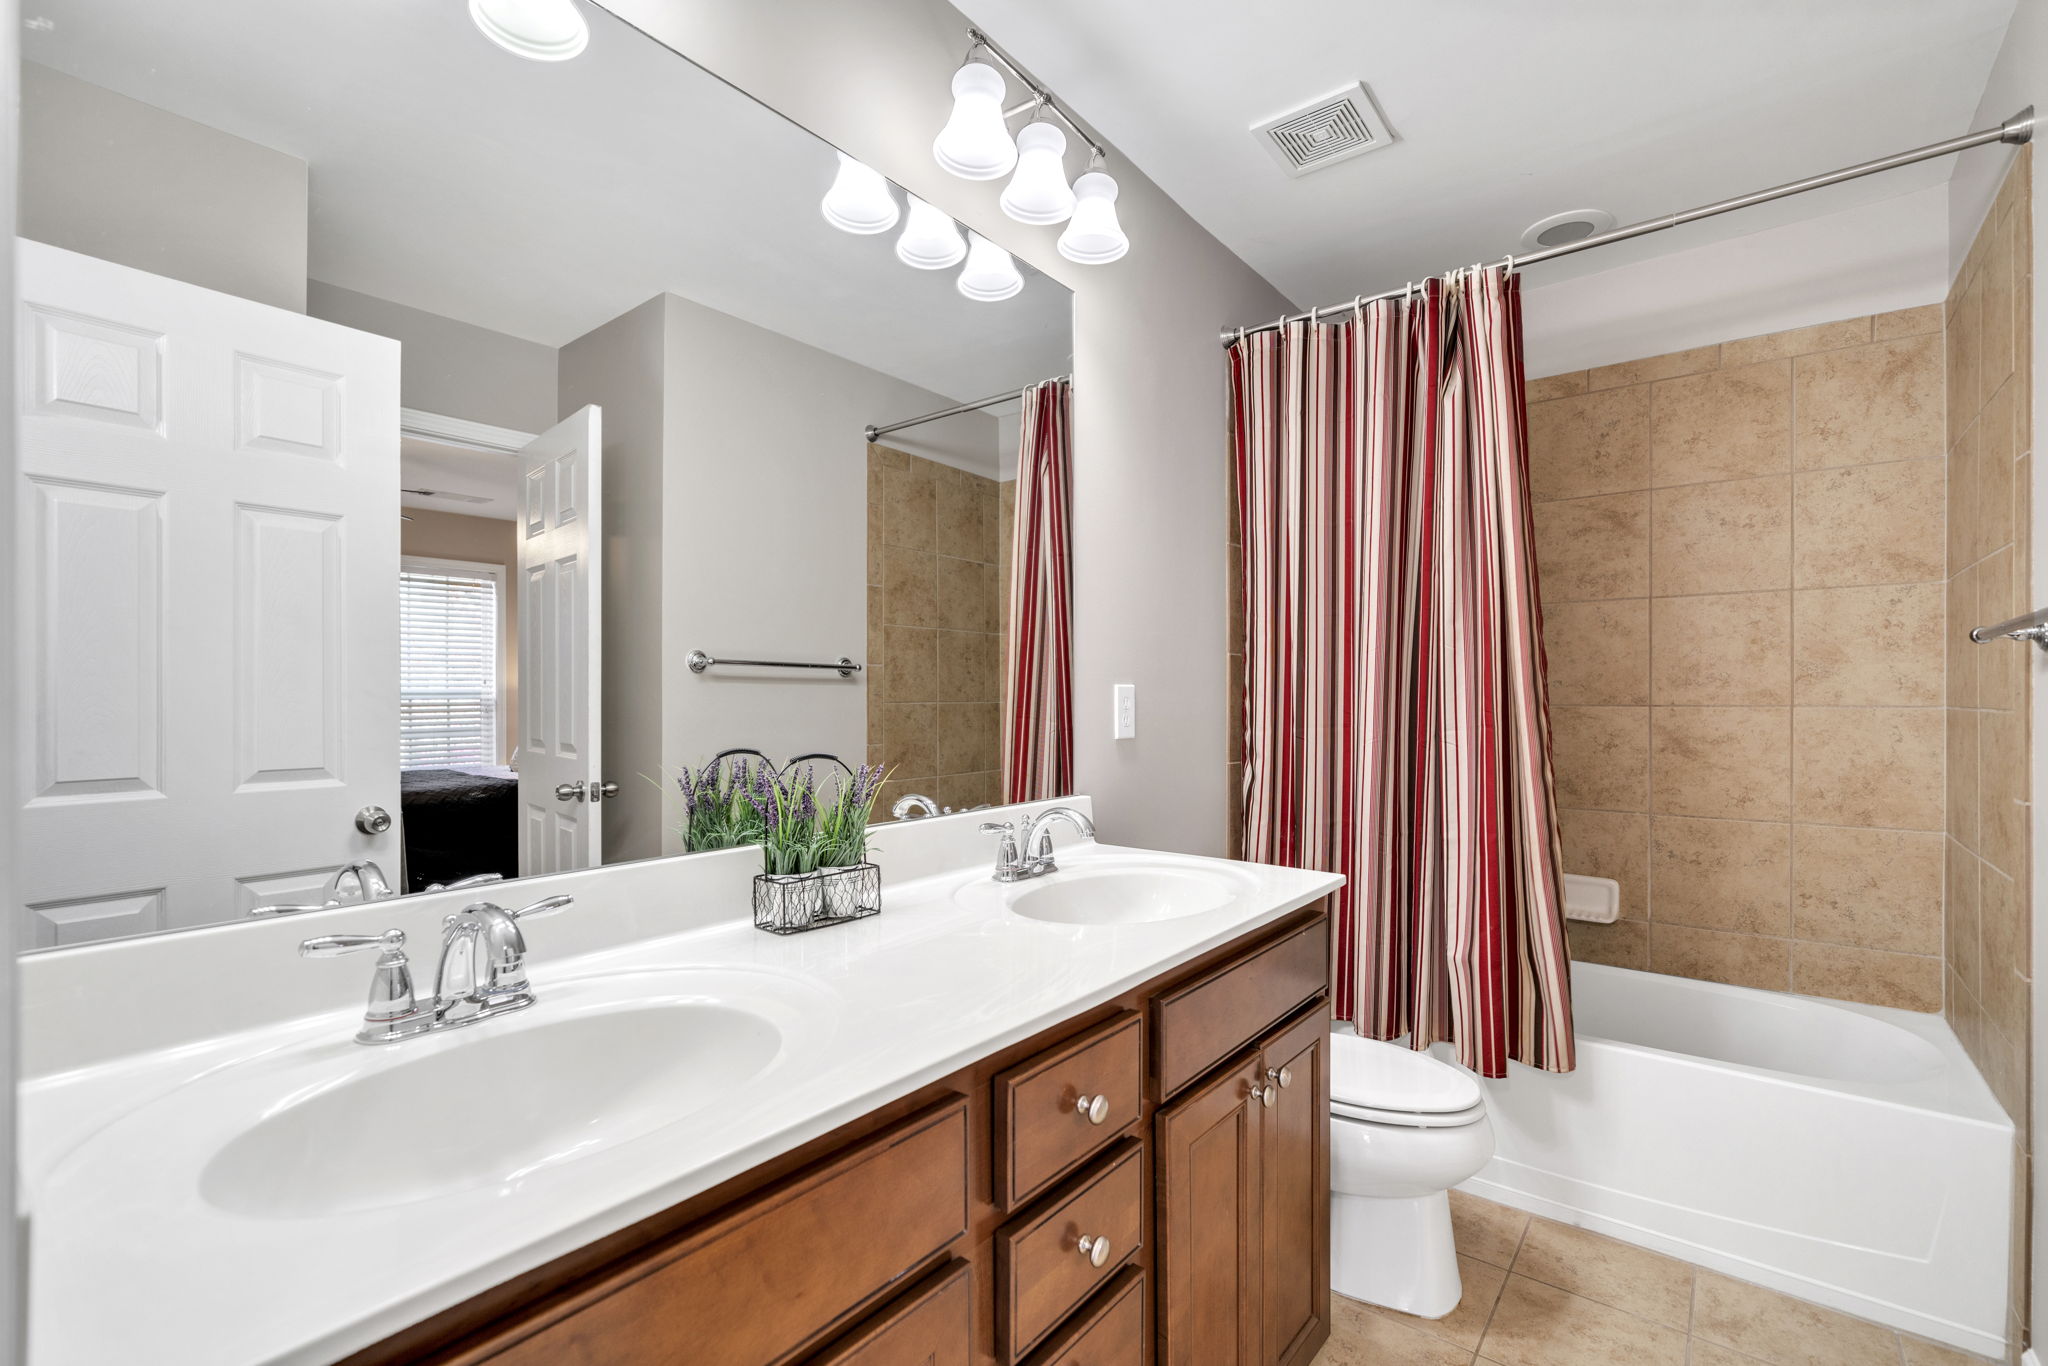 Hall Bathroom-double vanities-tile floors and tile surround